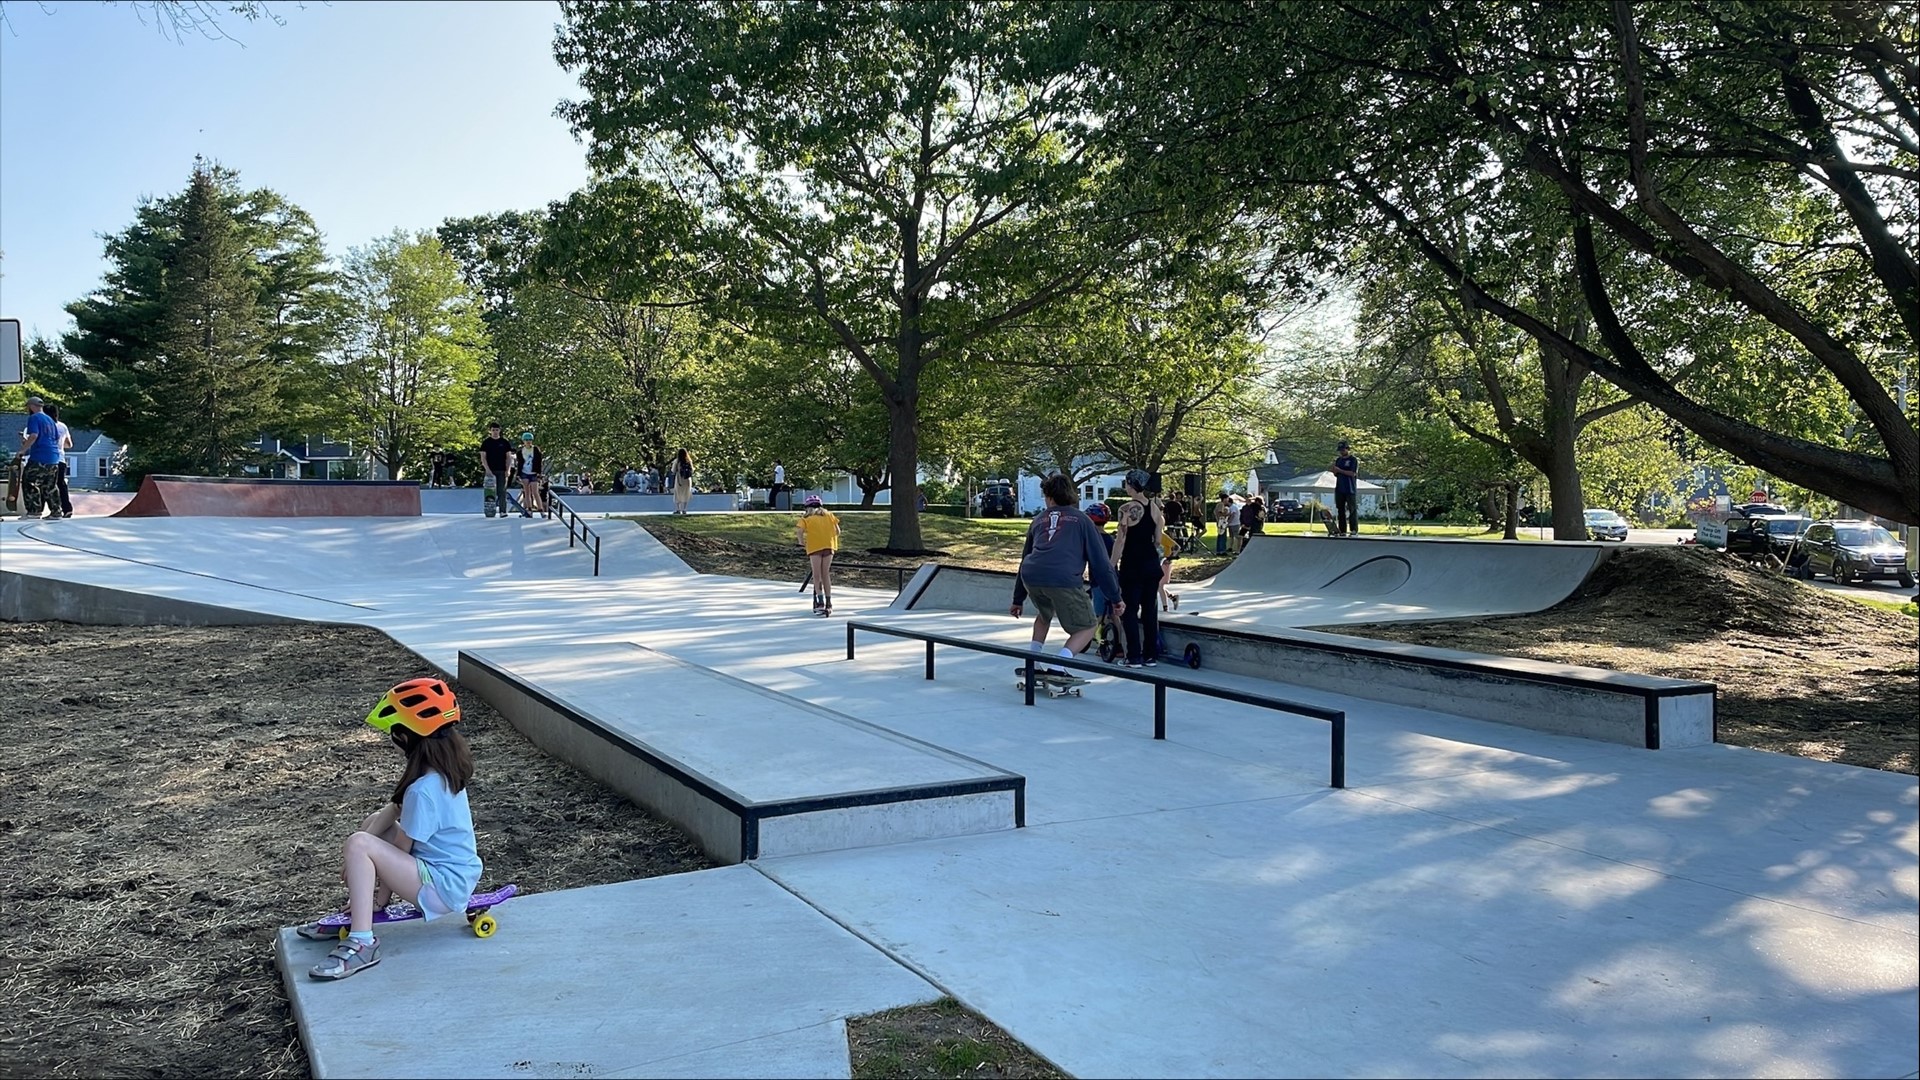 Skate park opens in South Portland